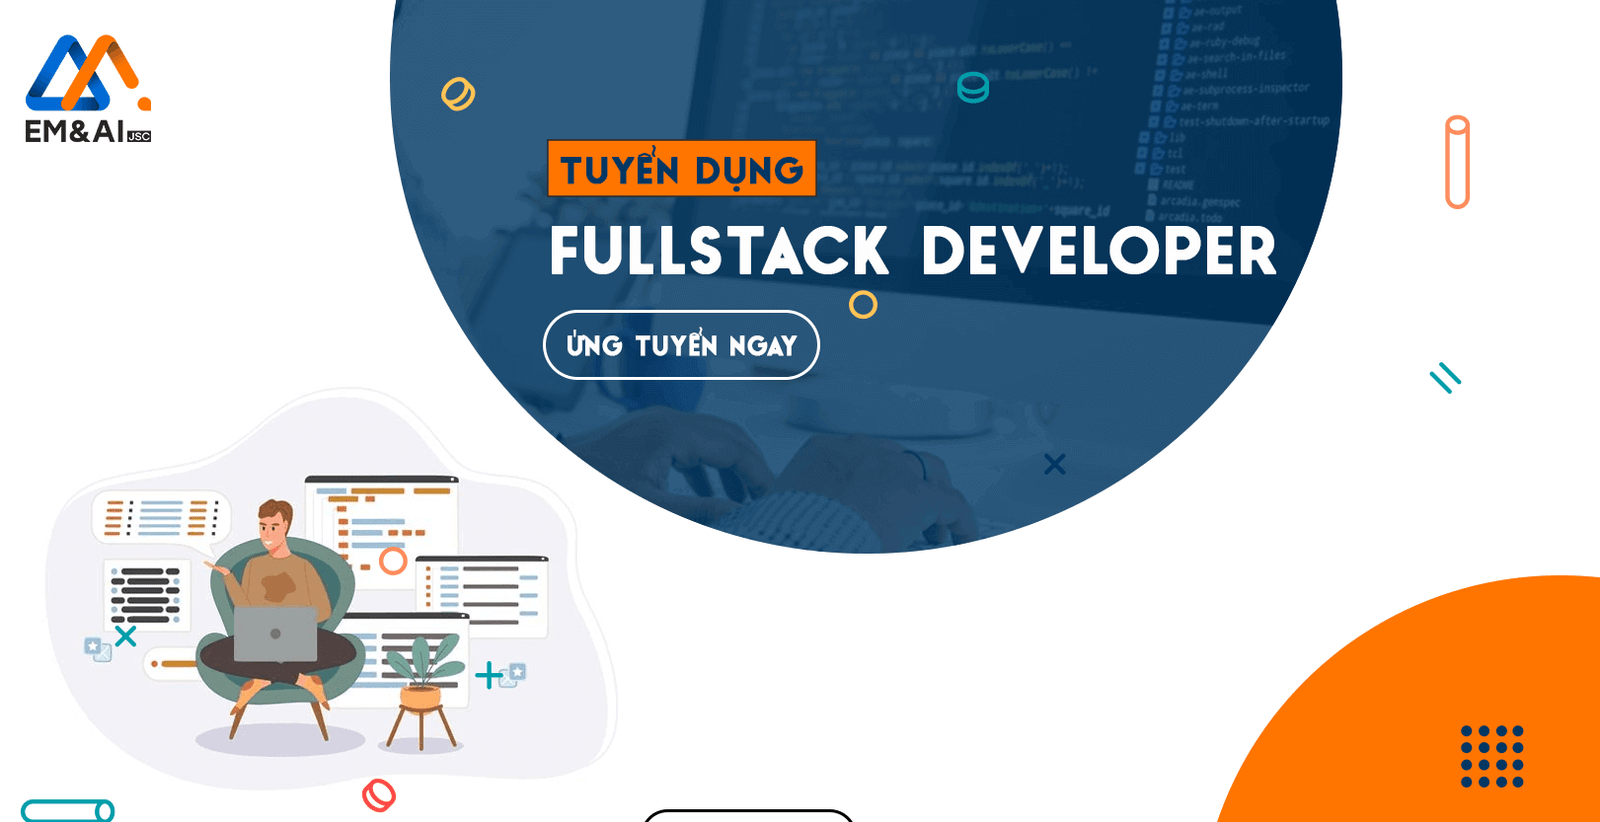 [ĐANG TUYỂN] Full Stack Developer